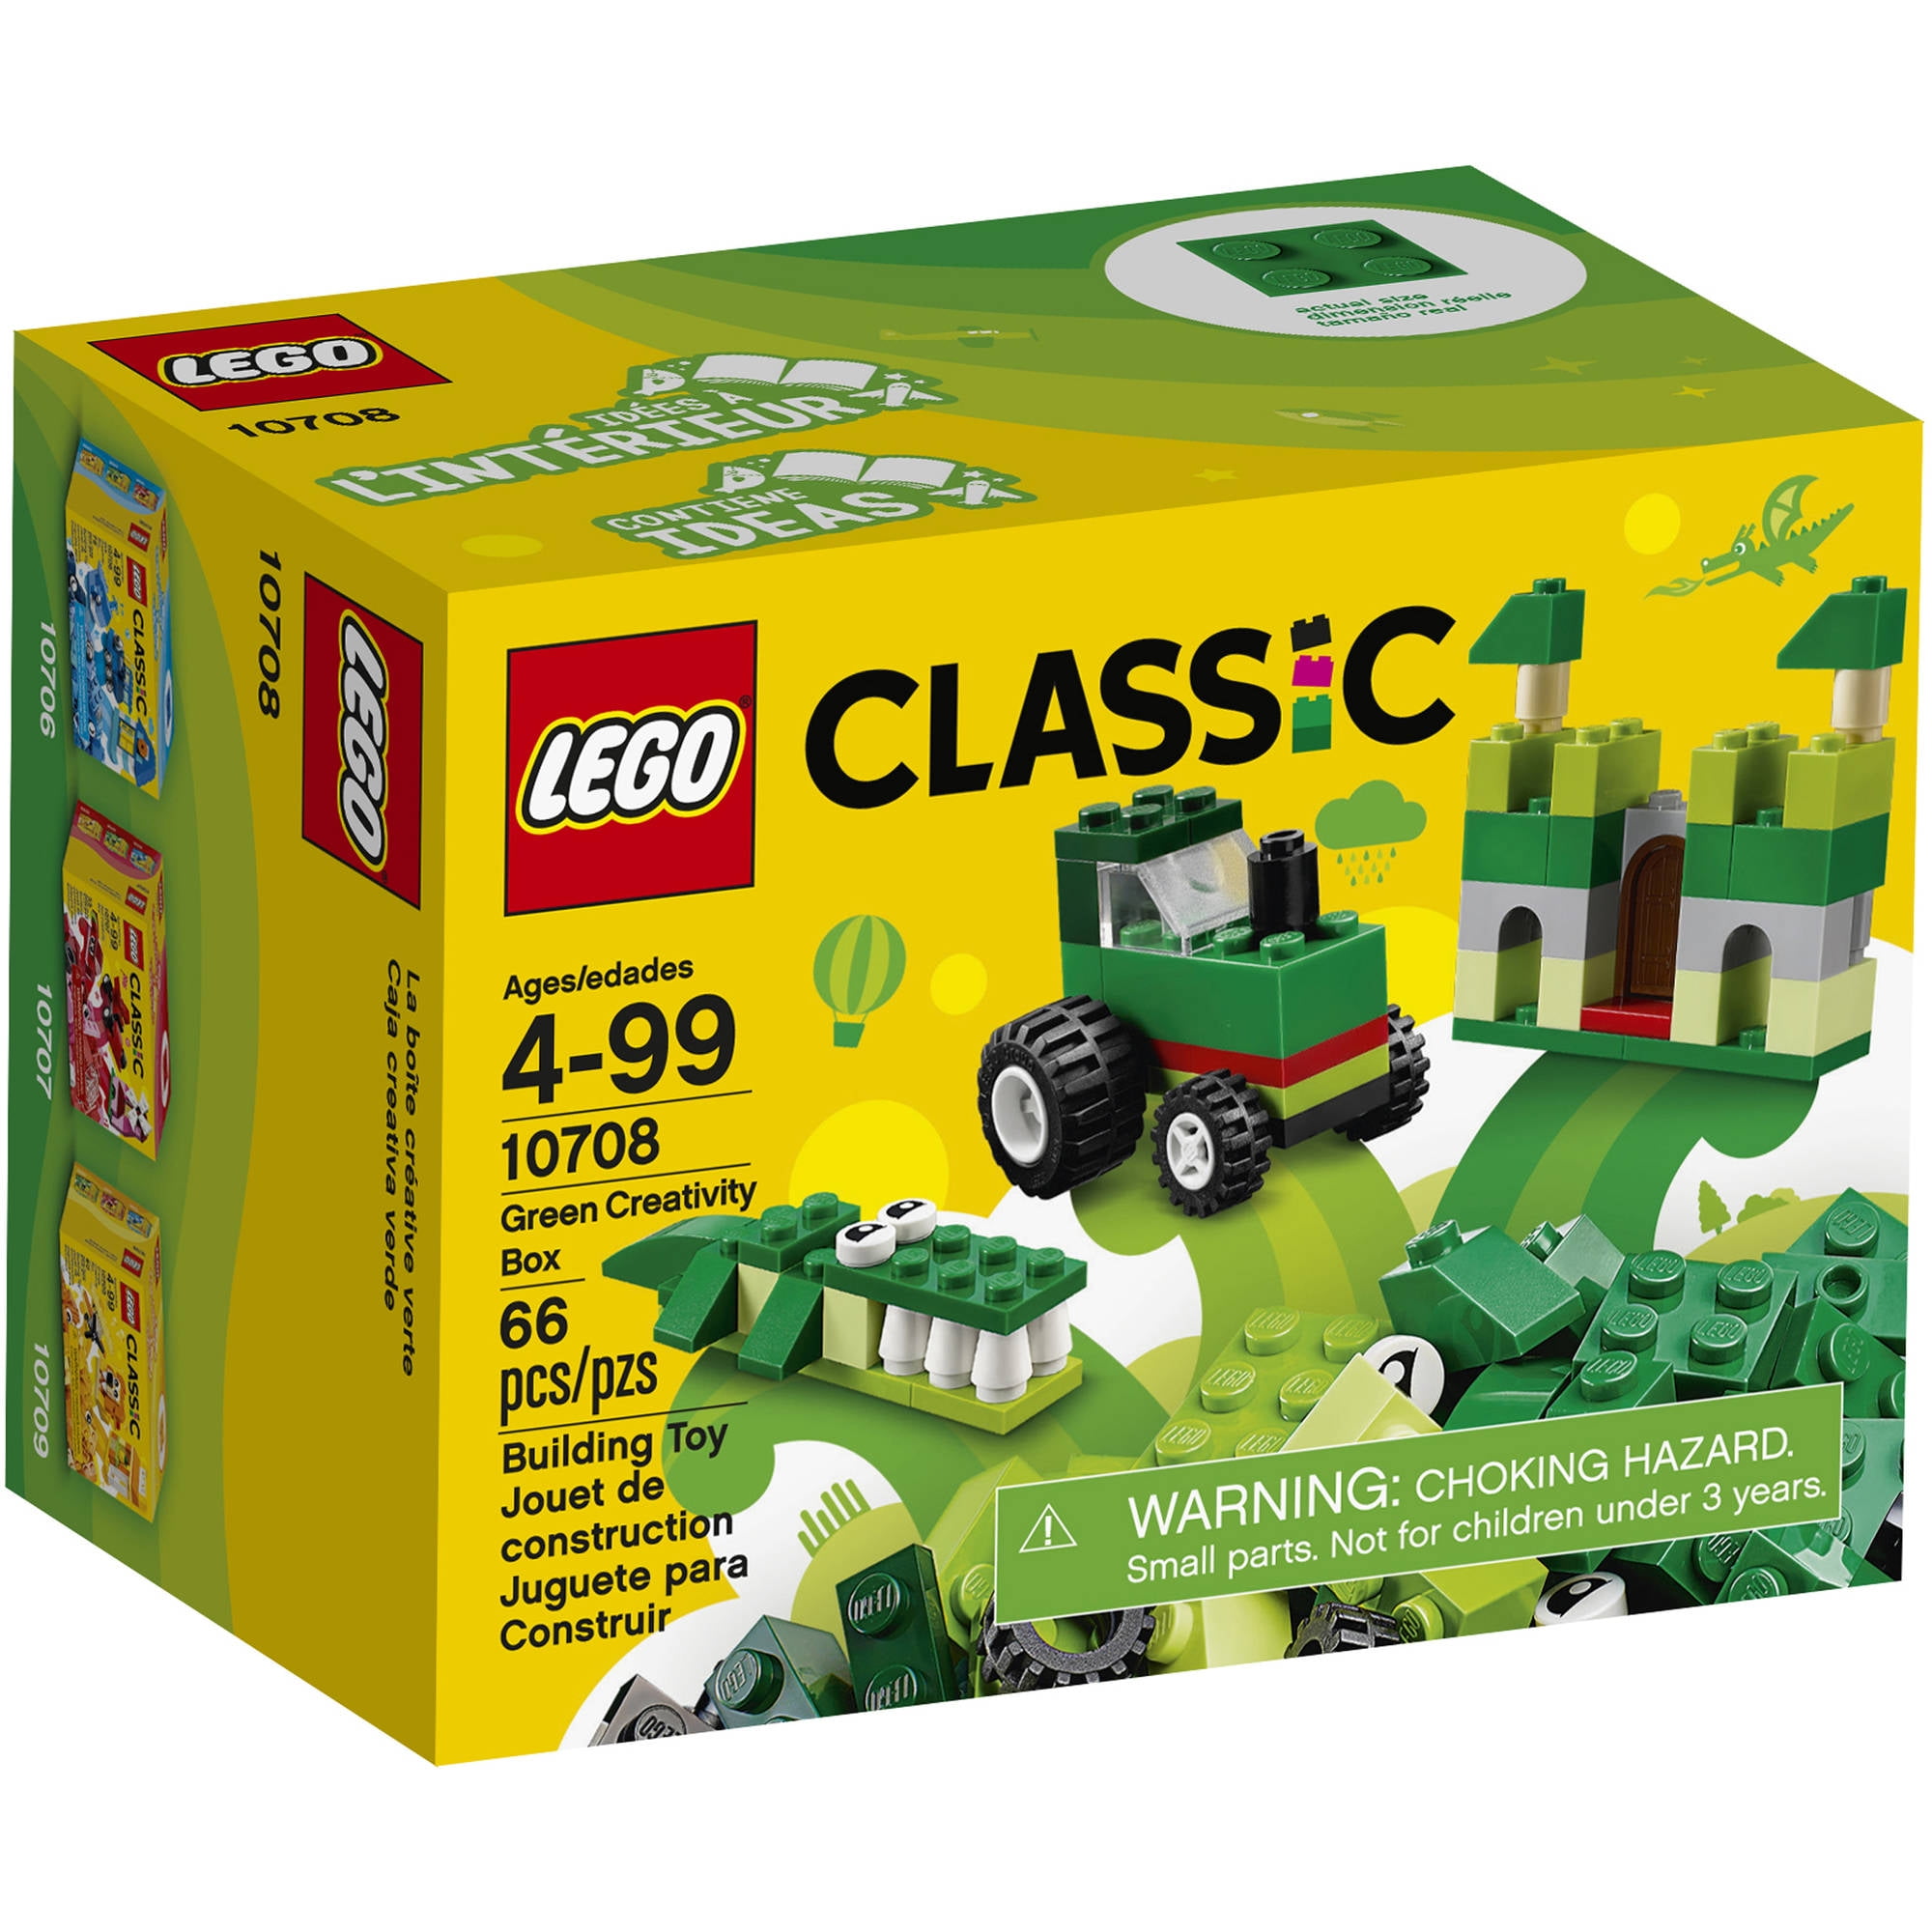 NIB LEGO Classic Green Creativity Box 10708 Building Kit Sealed 